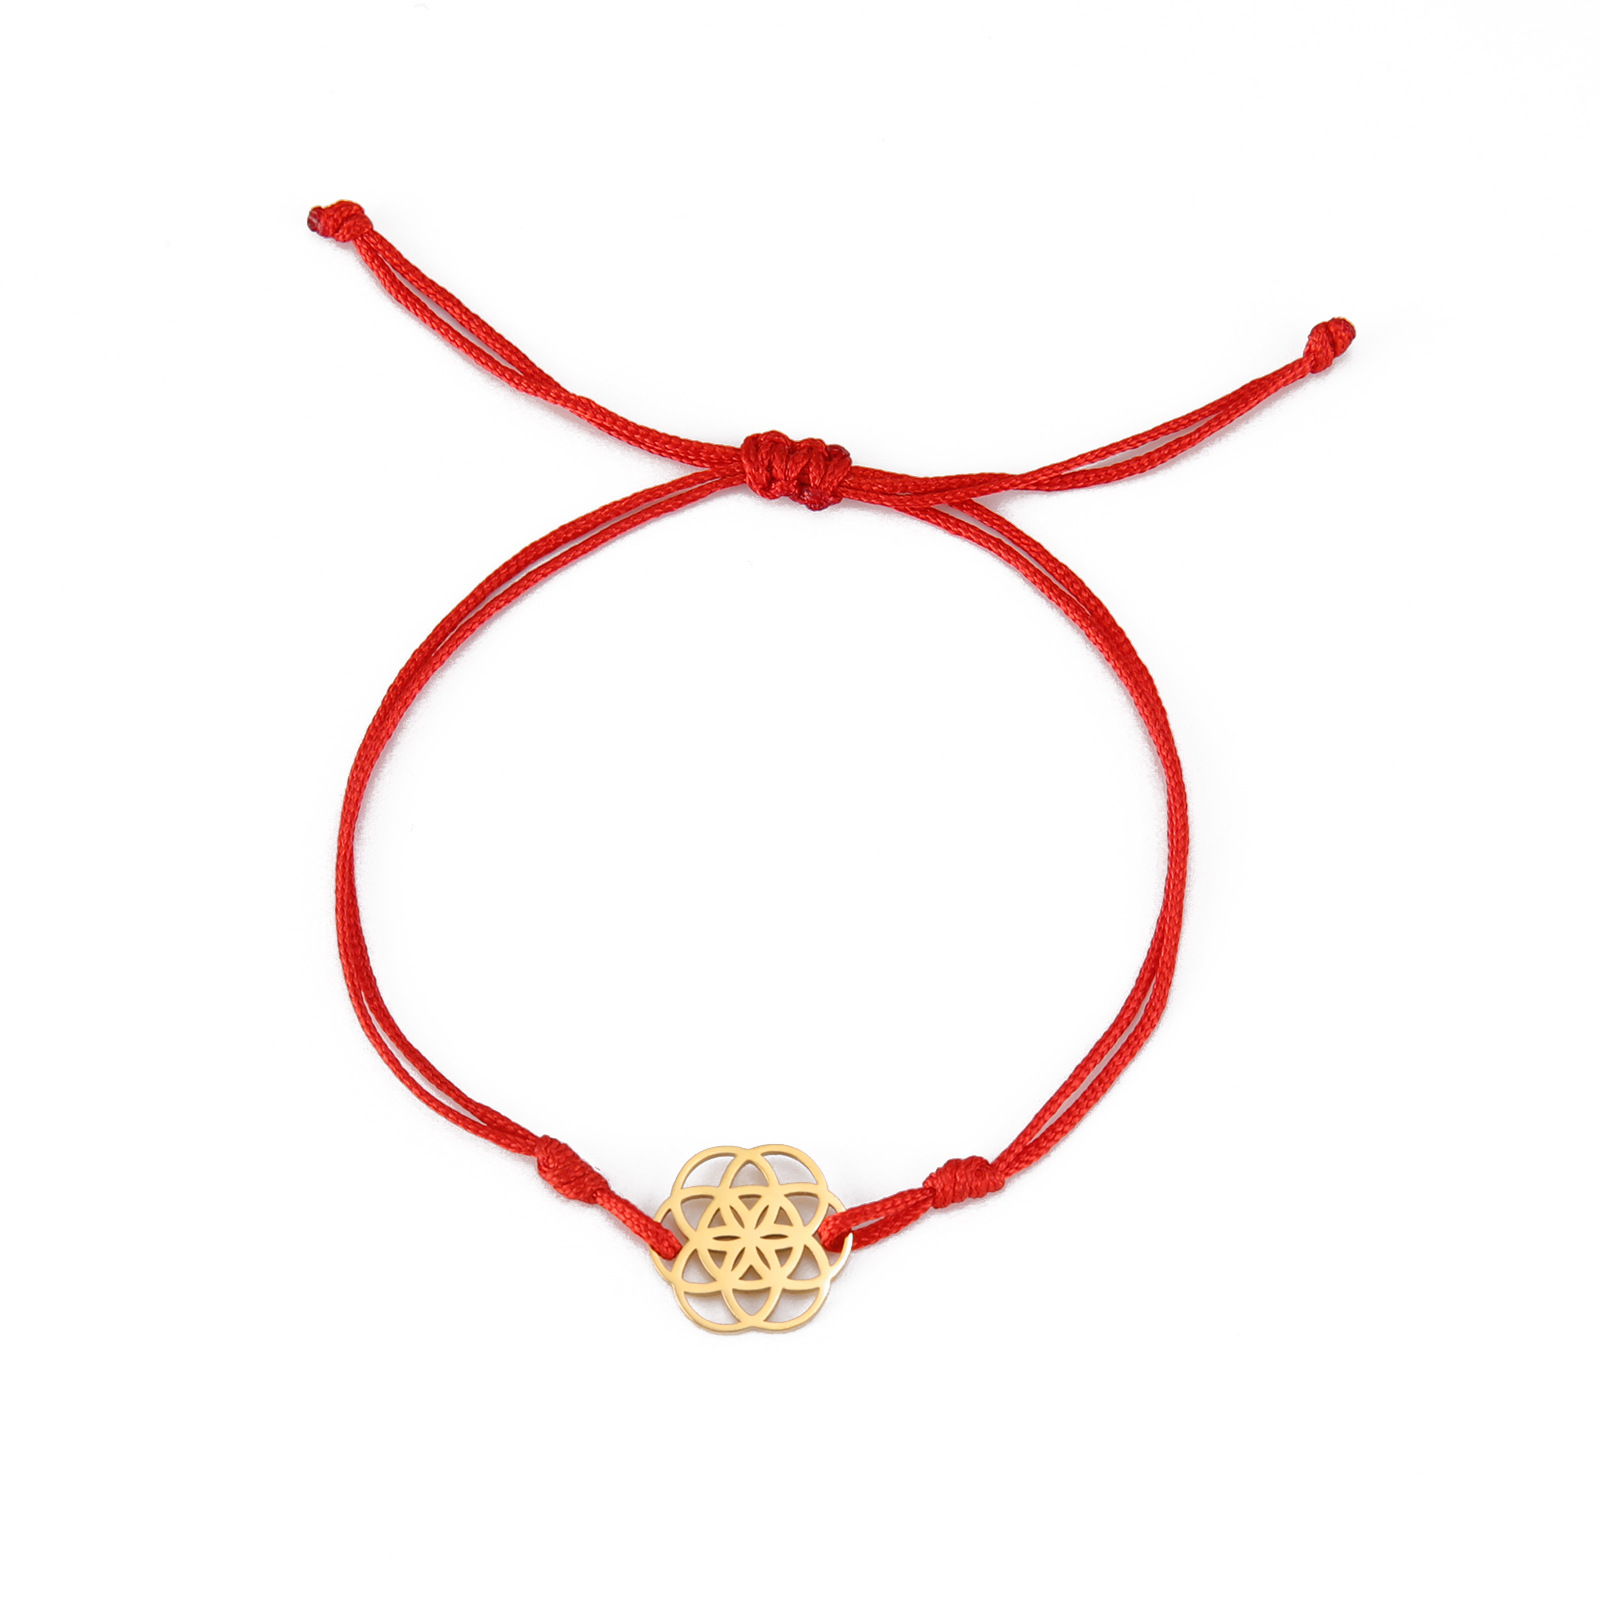 3:Red Jade thread-gold